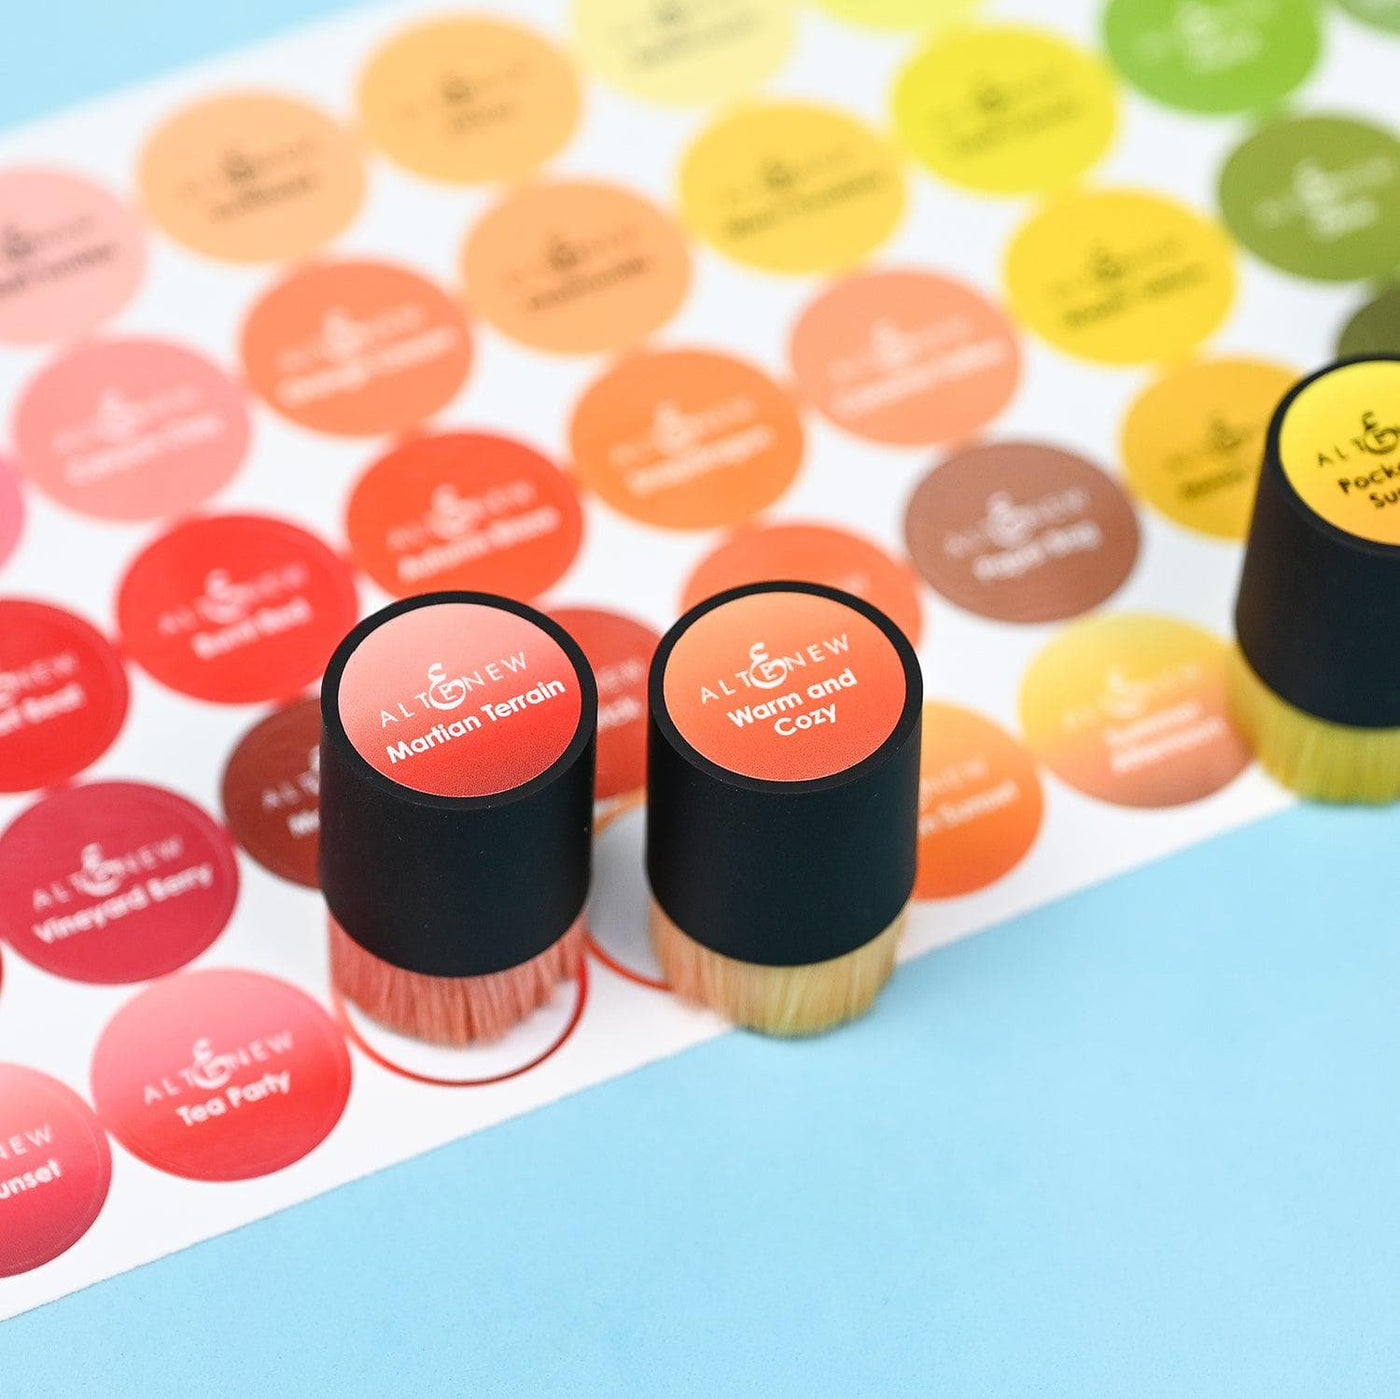 Misil Craft Decals Small Ink Blending Brush Label Set - All Crisp Dye Ink Colors (4 Sheets)